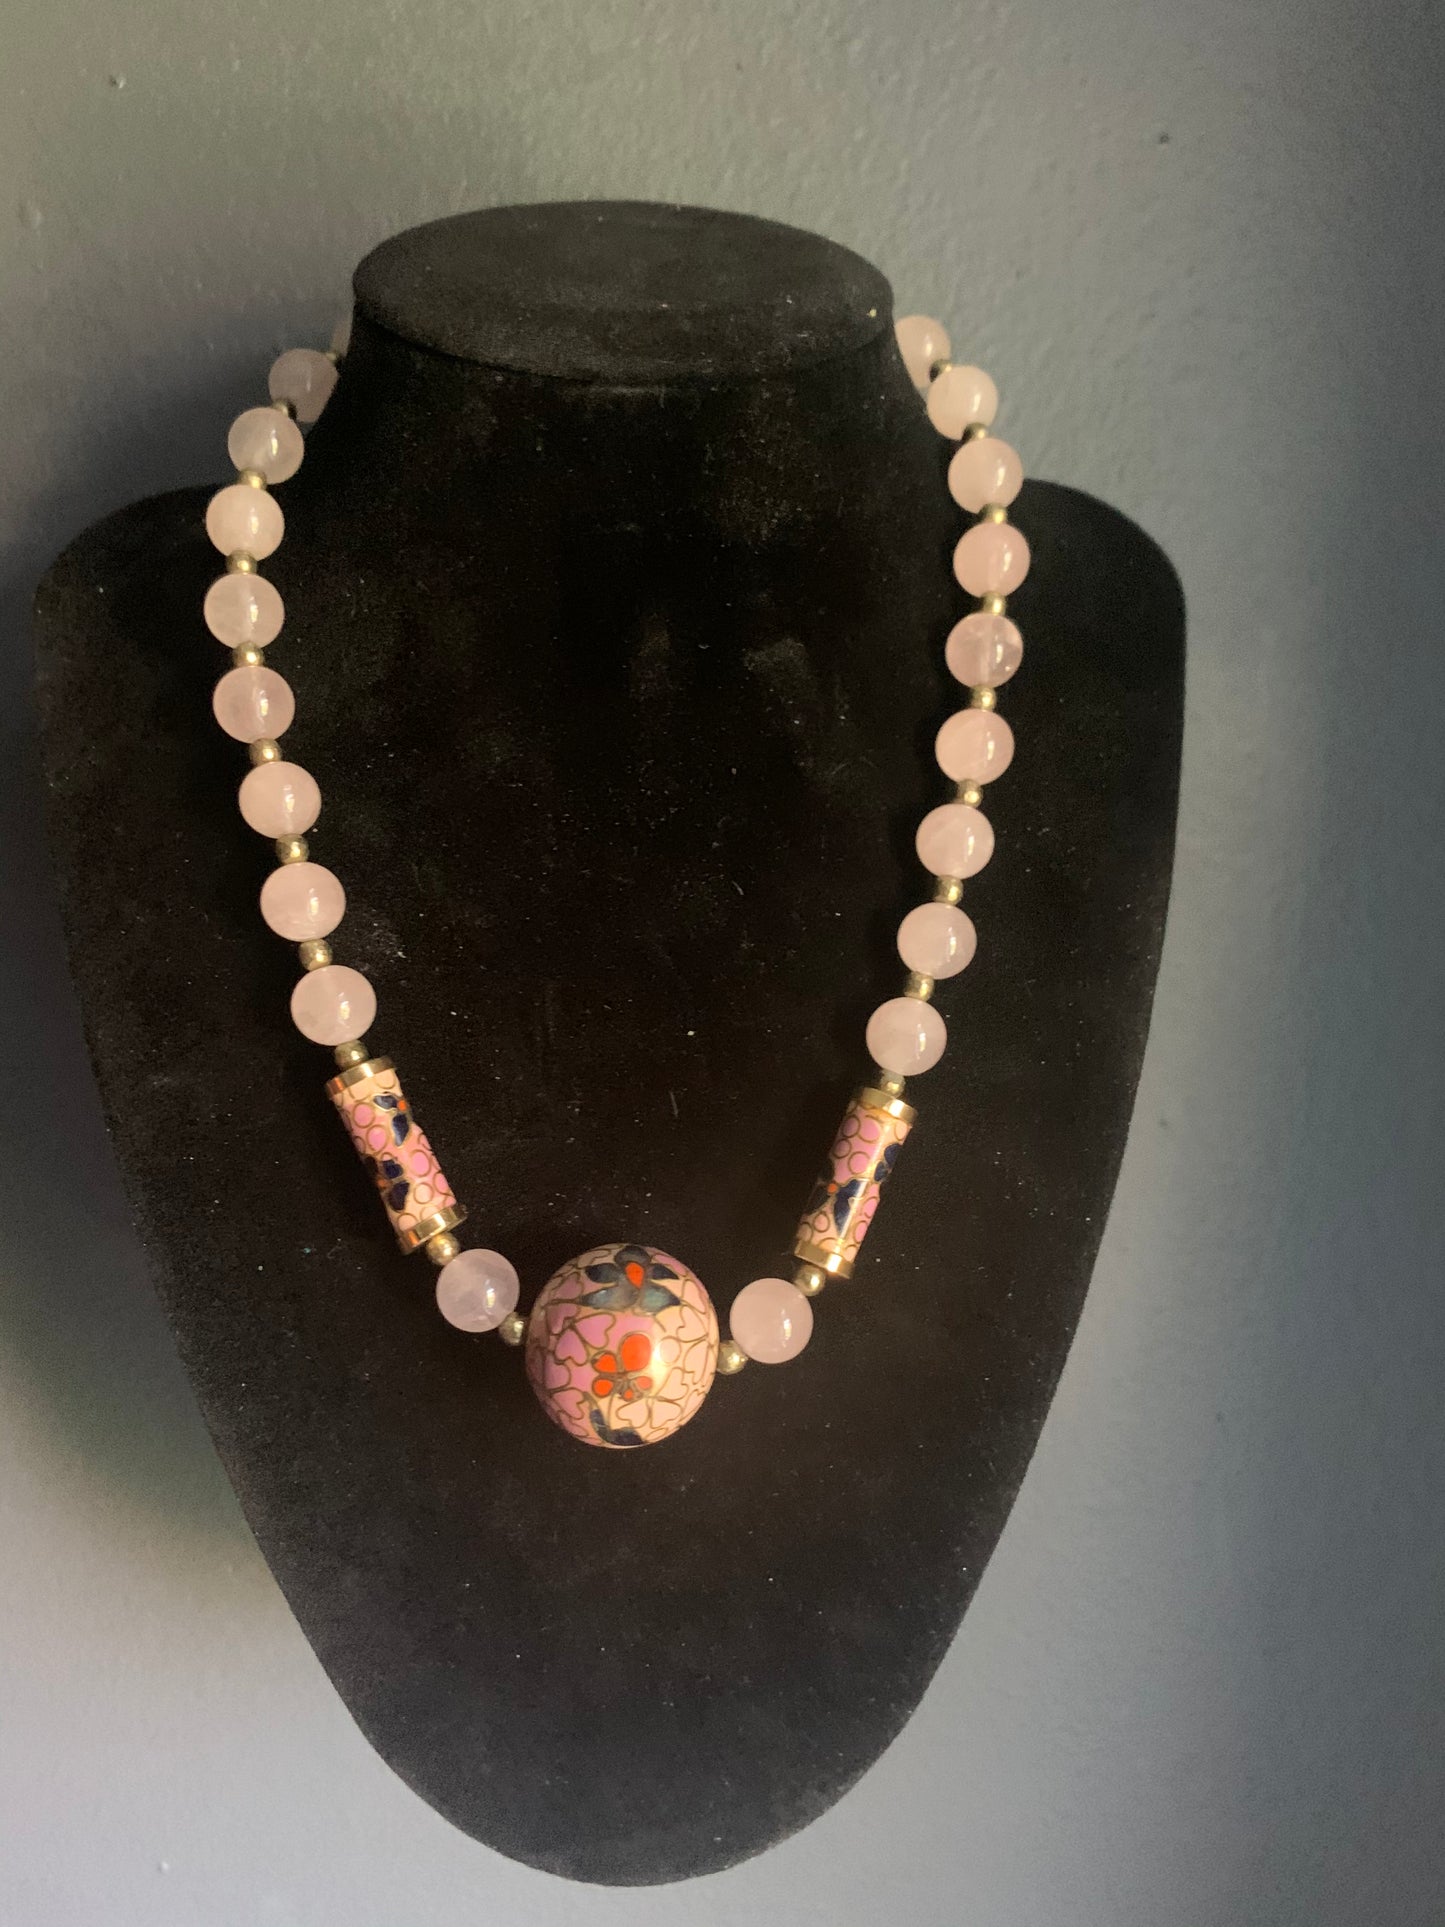 A necklace with rose quartz beads